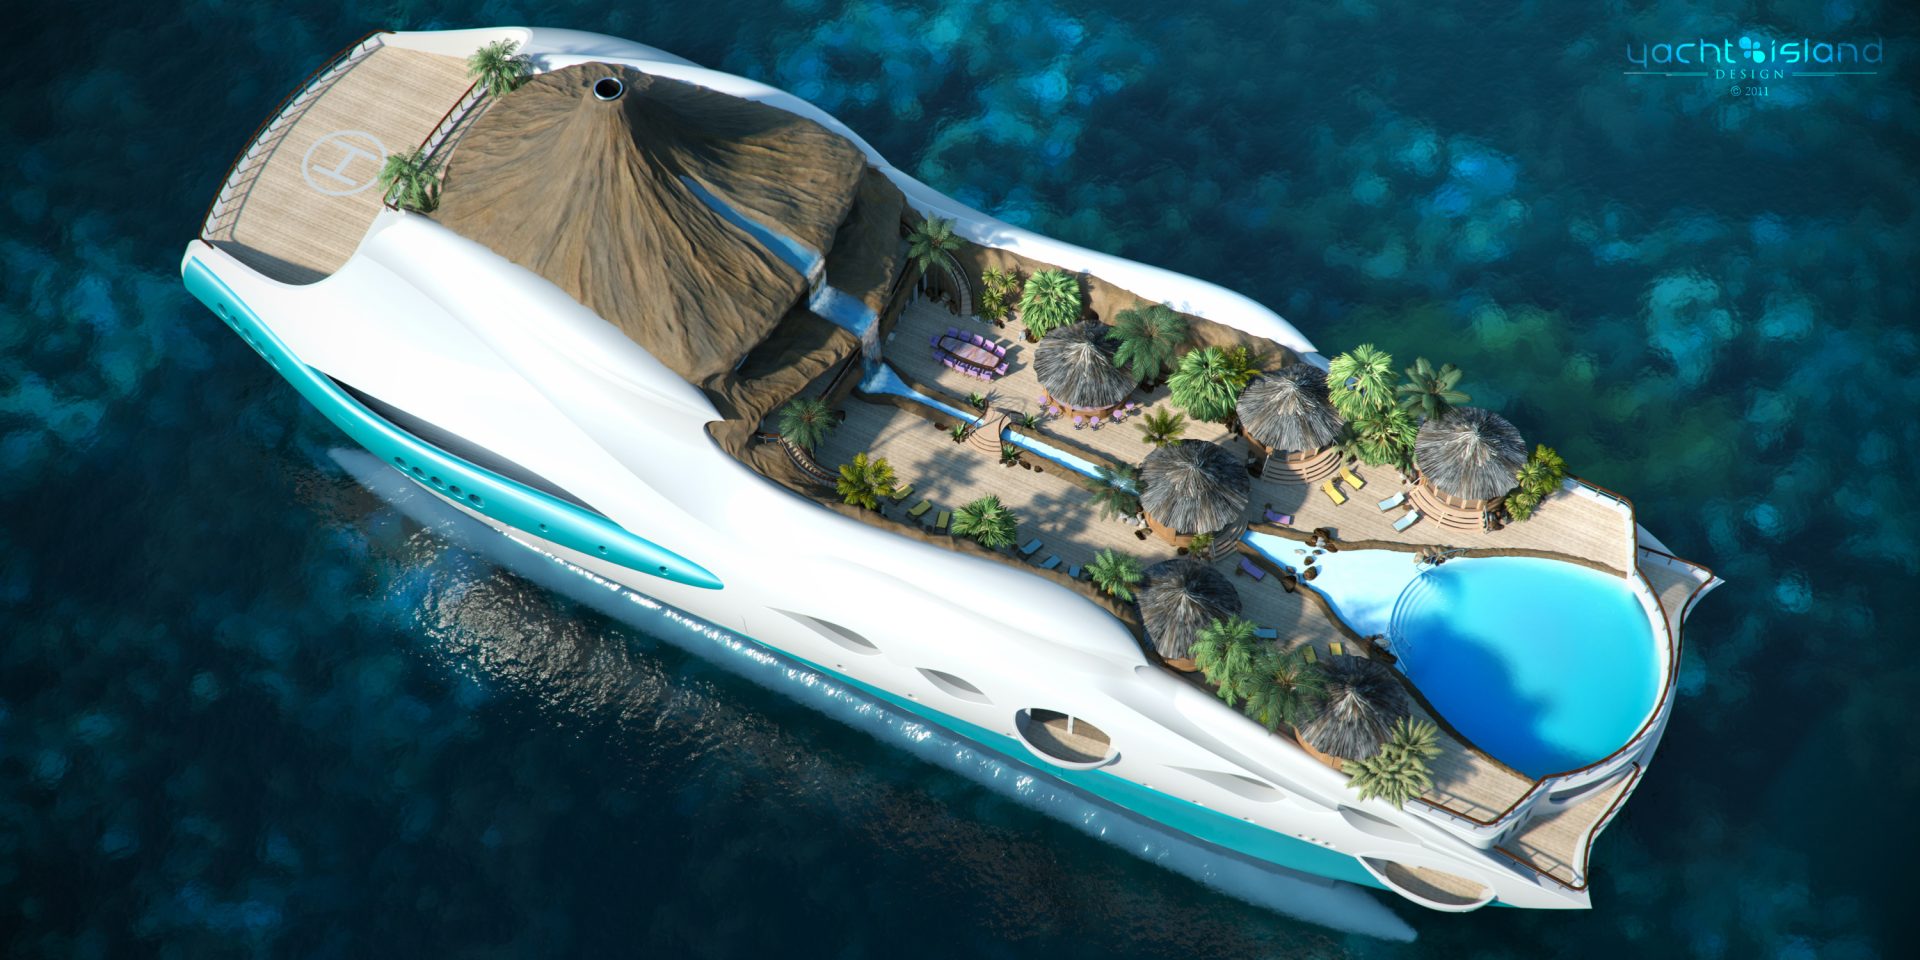 Tropical Island Paradise: Yacht Island Design